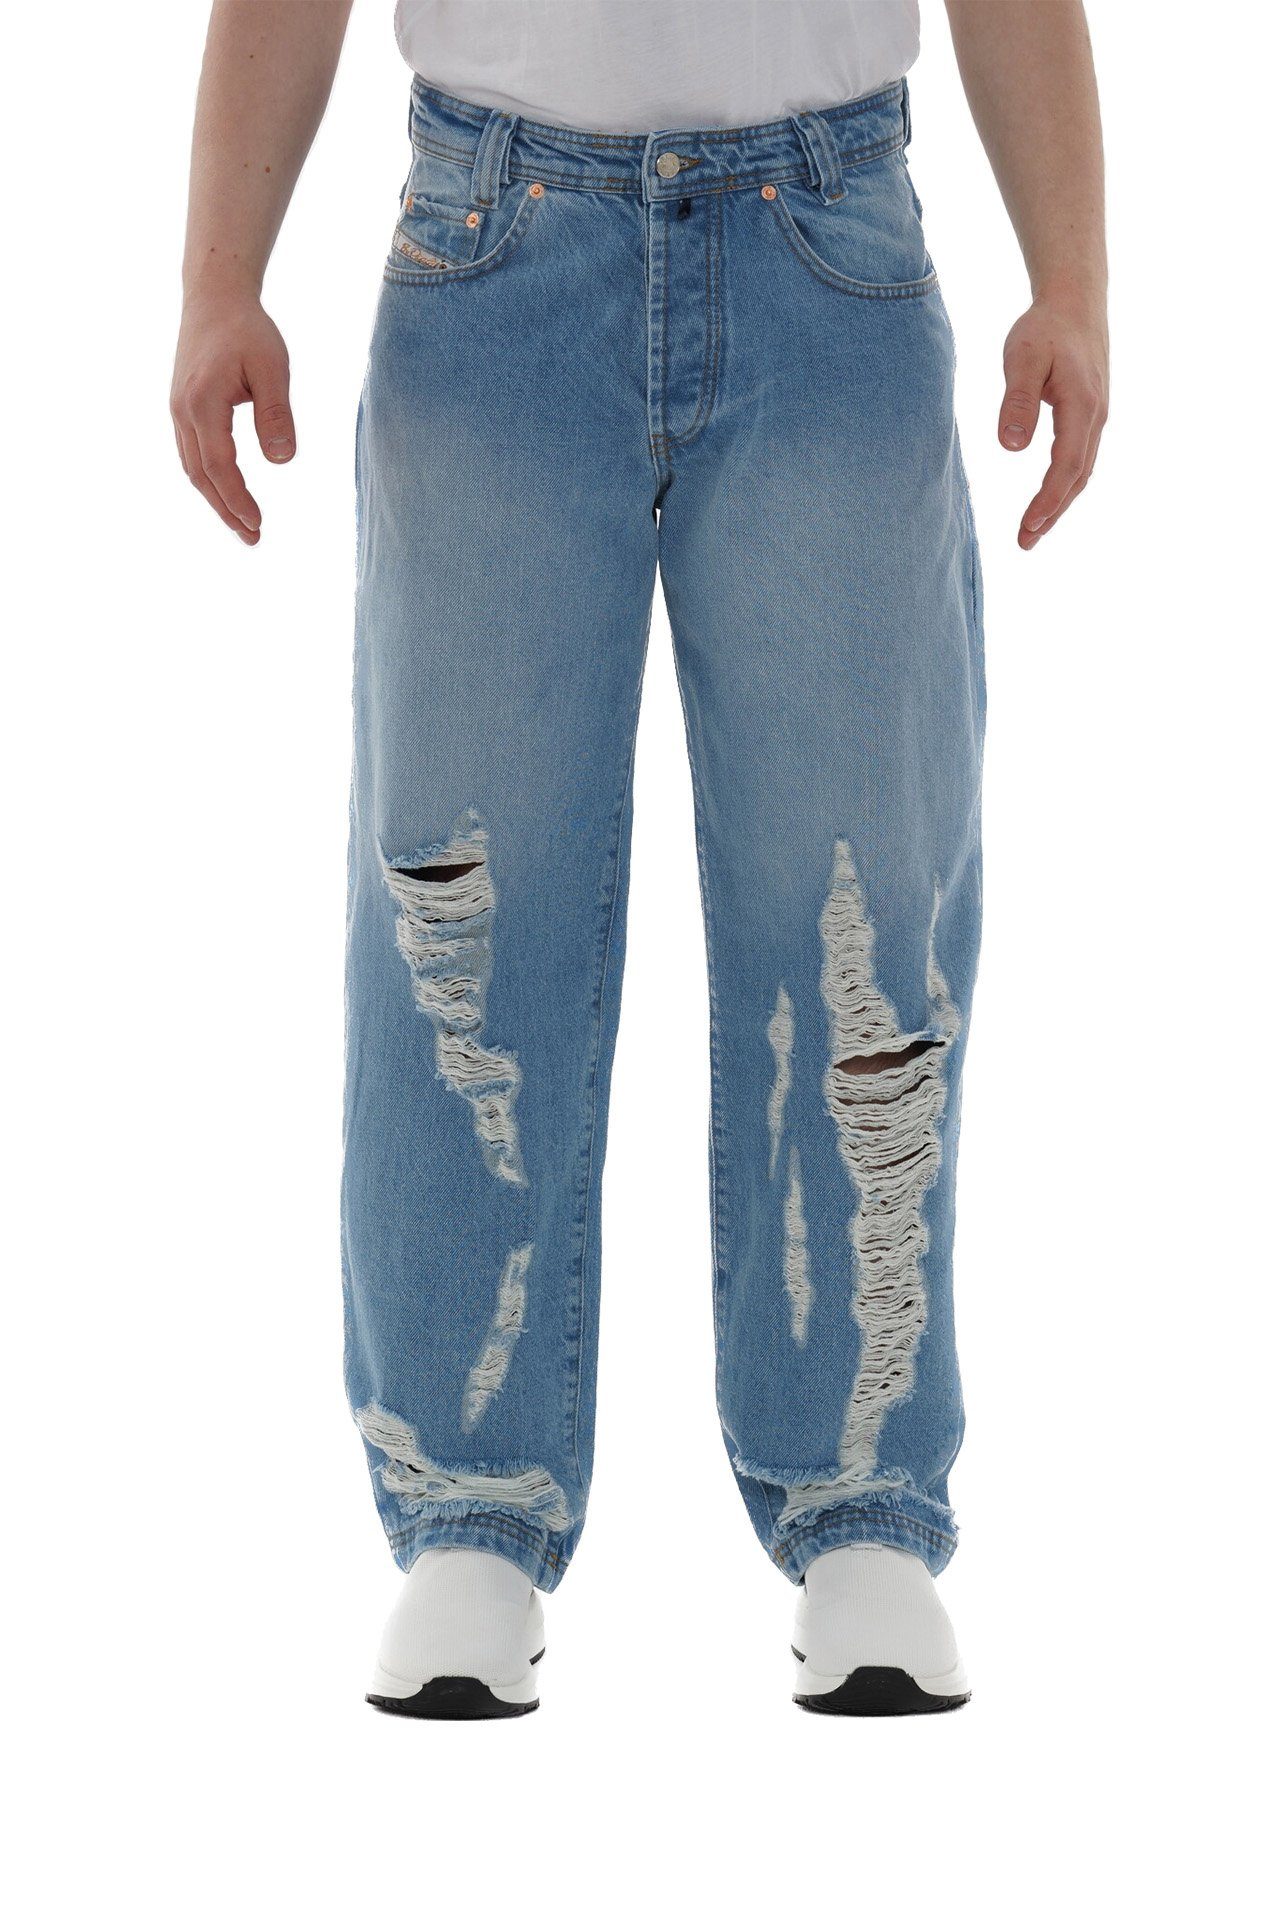 PICALDI Fit, Pocket Weite Raze Loose 471 Five Zicco Jeans Jeans Jeans